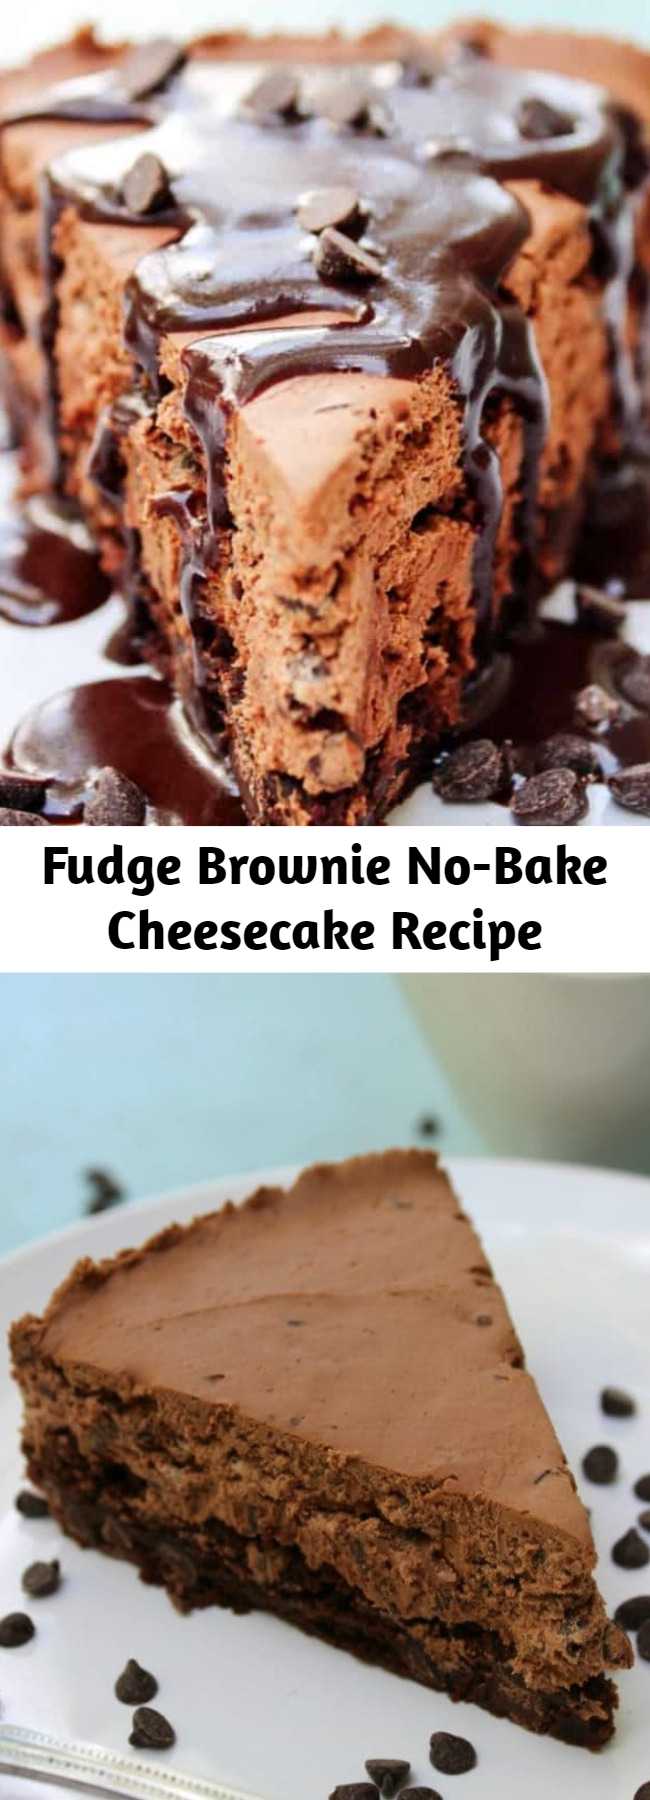 Fudge Brownie No-Bake Cheesecake Recipe - Fudge Brownie No-Bake Cheesecake is a rich, chocolate lover’s dream. Made with double chocolate brownie, chocolate chip no-bake cheesecake, and fudge.